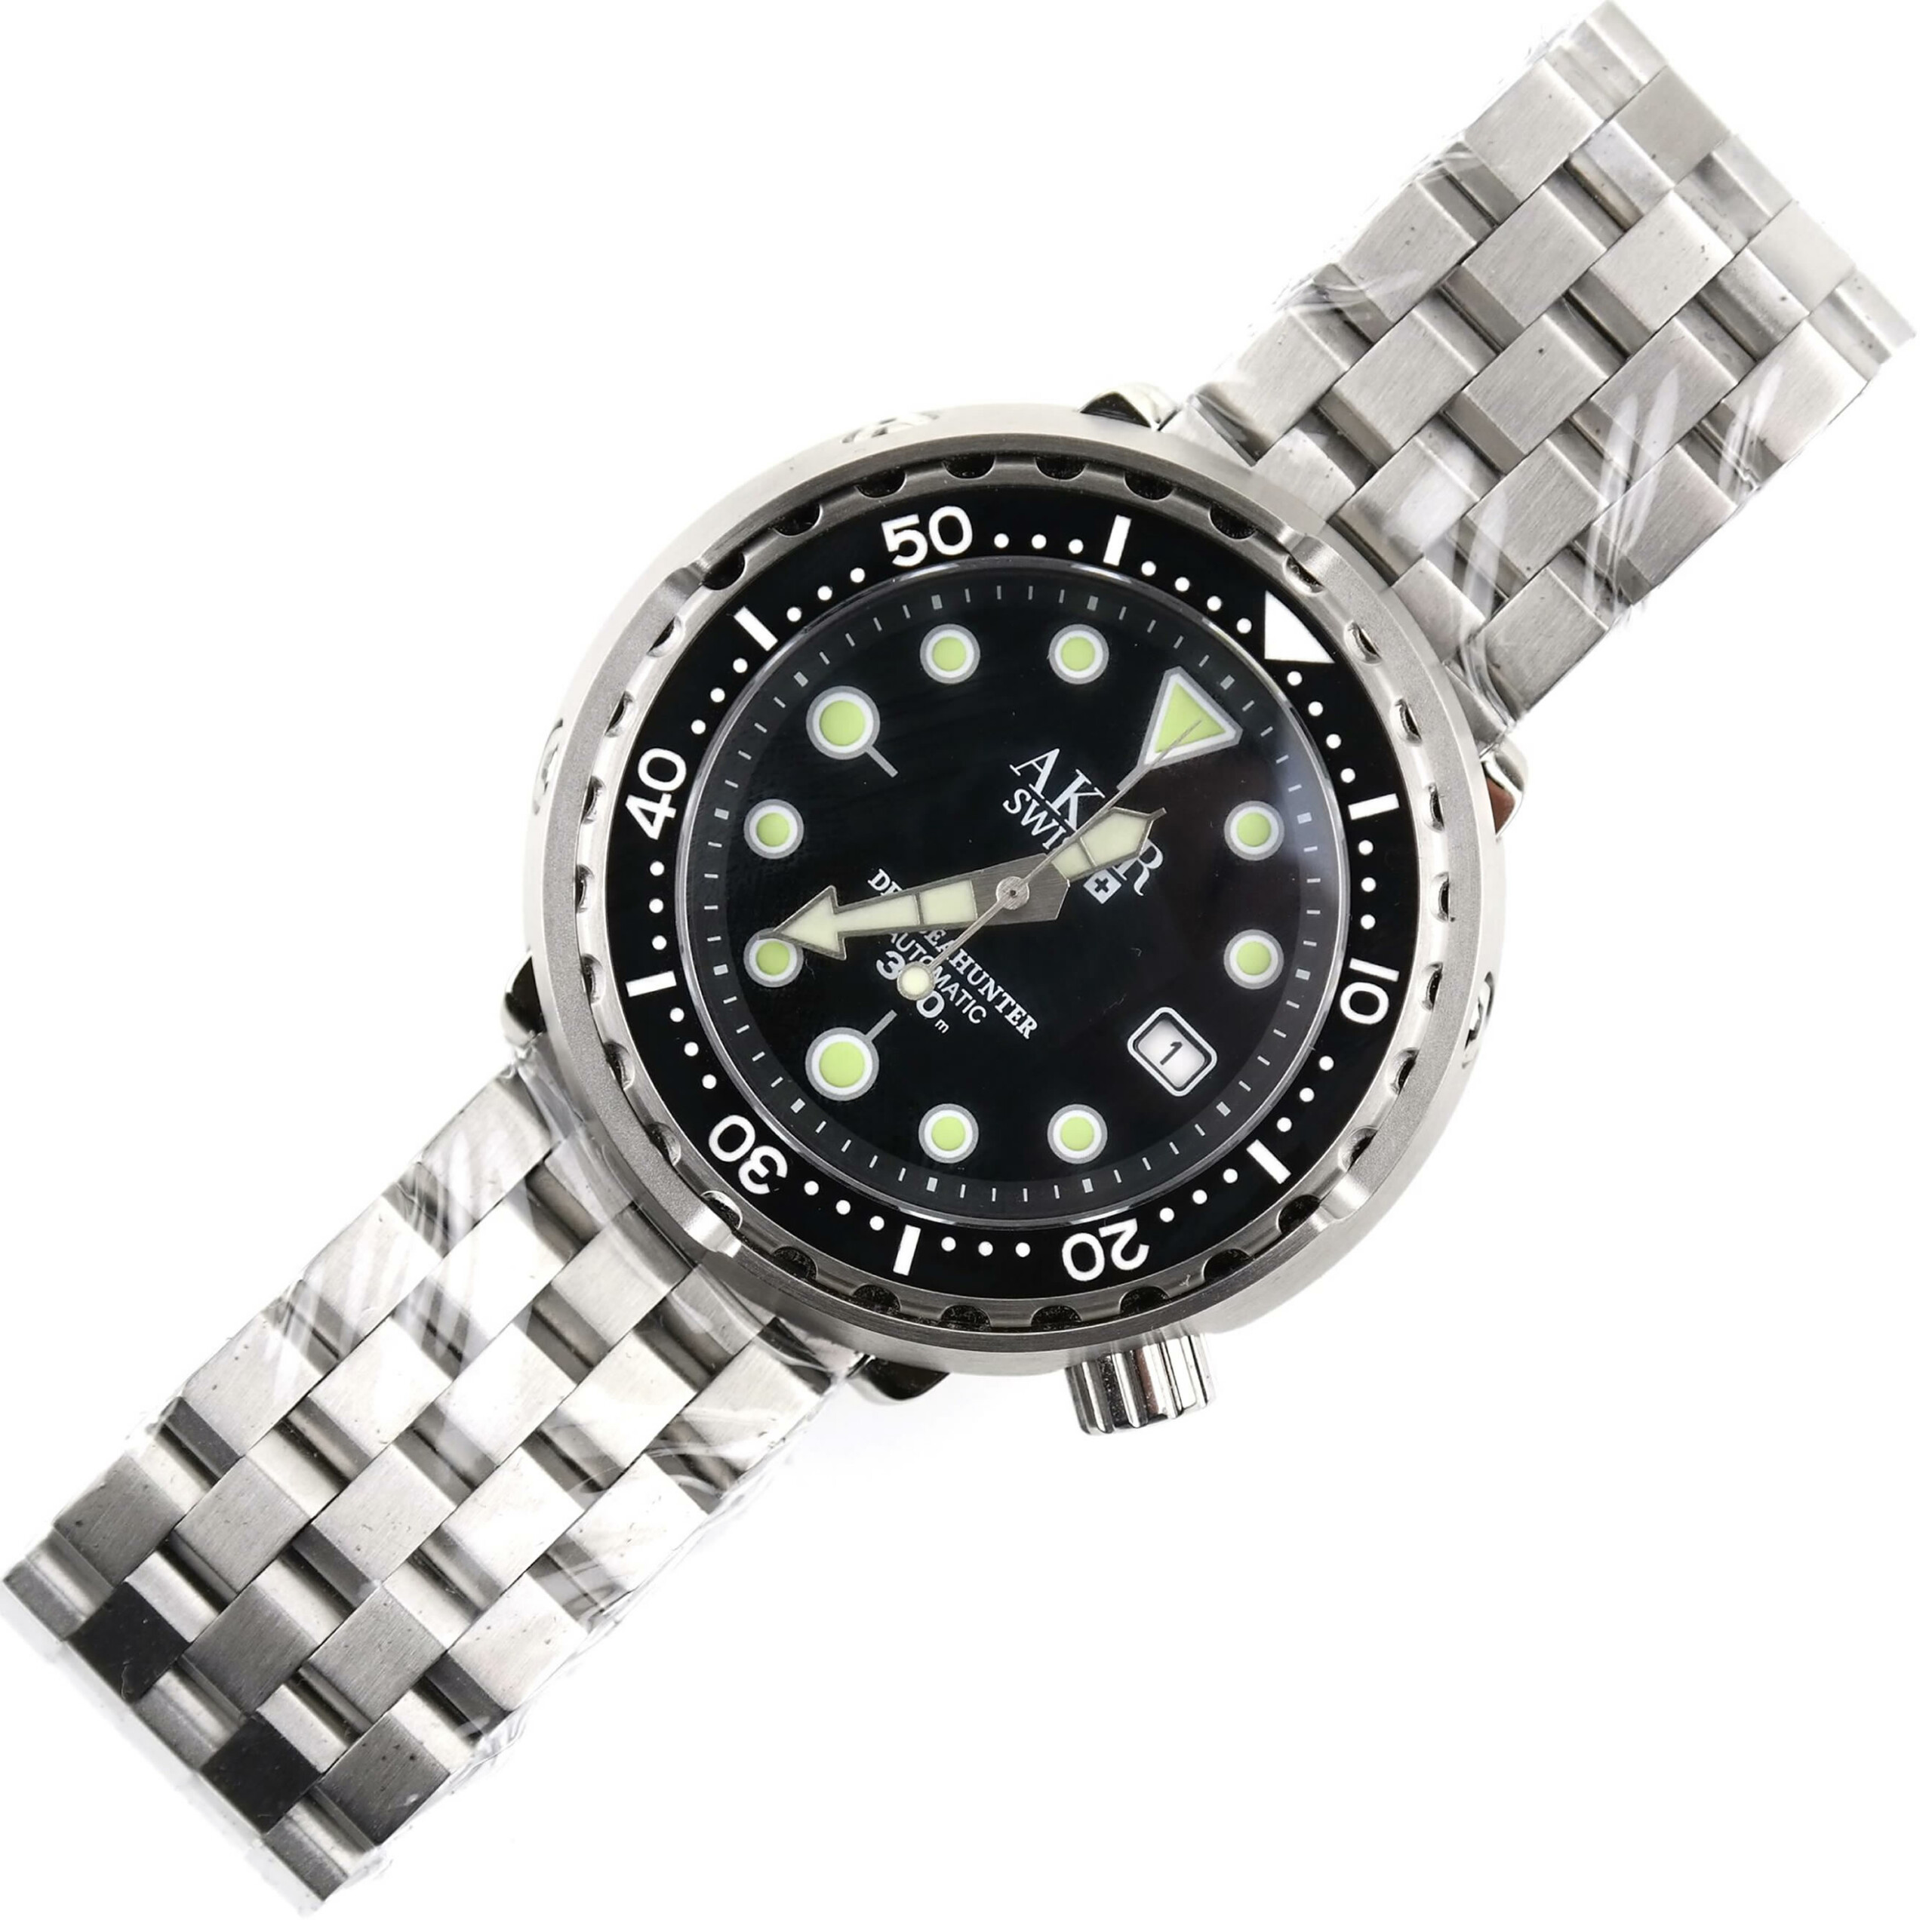 AKOR SWISS - DEEP SEA HUNTER Automatic Watch - Diving 300 M - Black